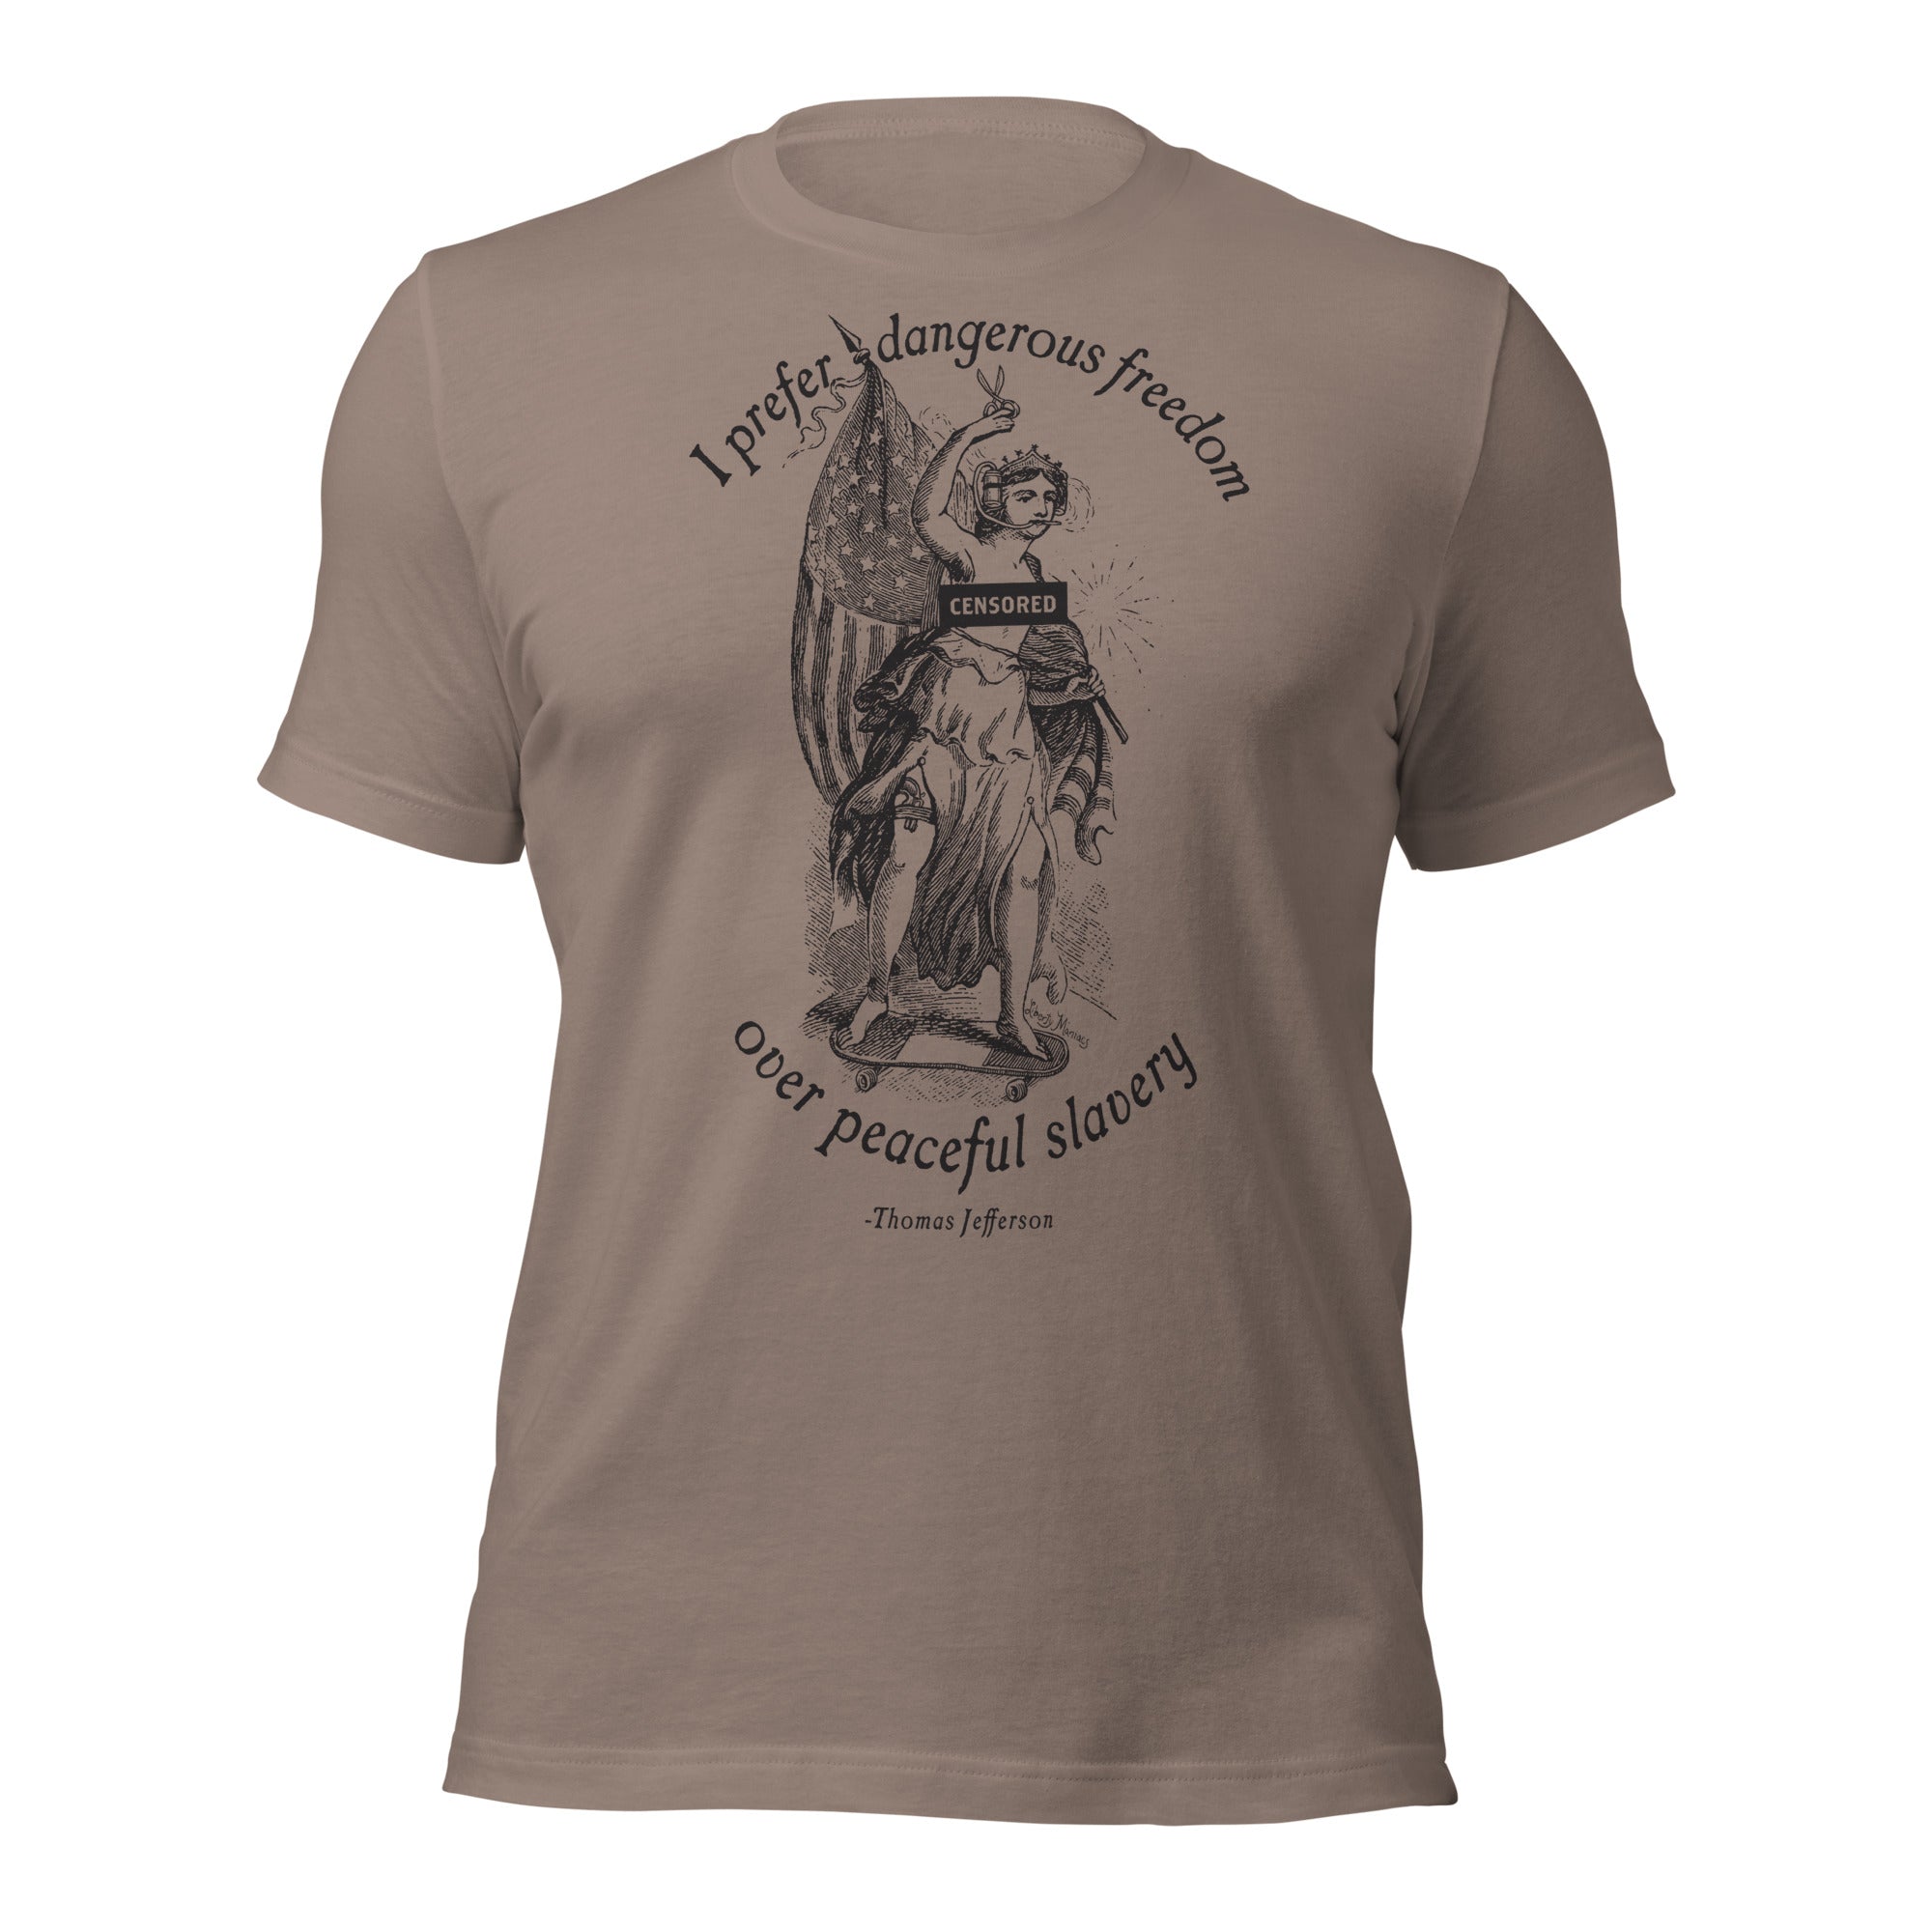 I Prefer Dangerous Freedom Jefferson Quote T-Shirt